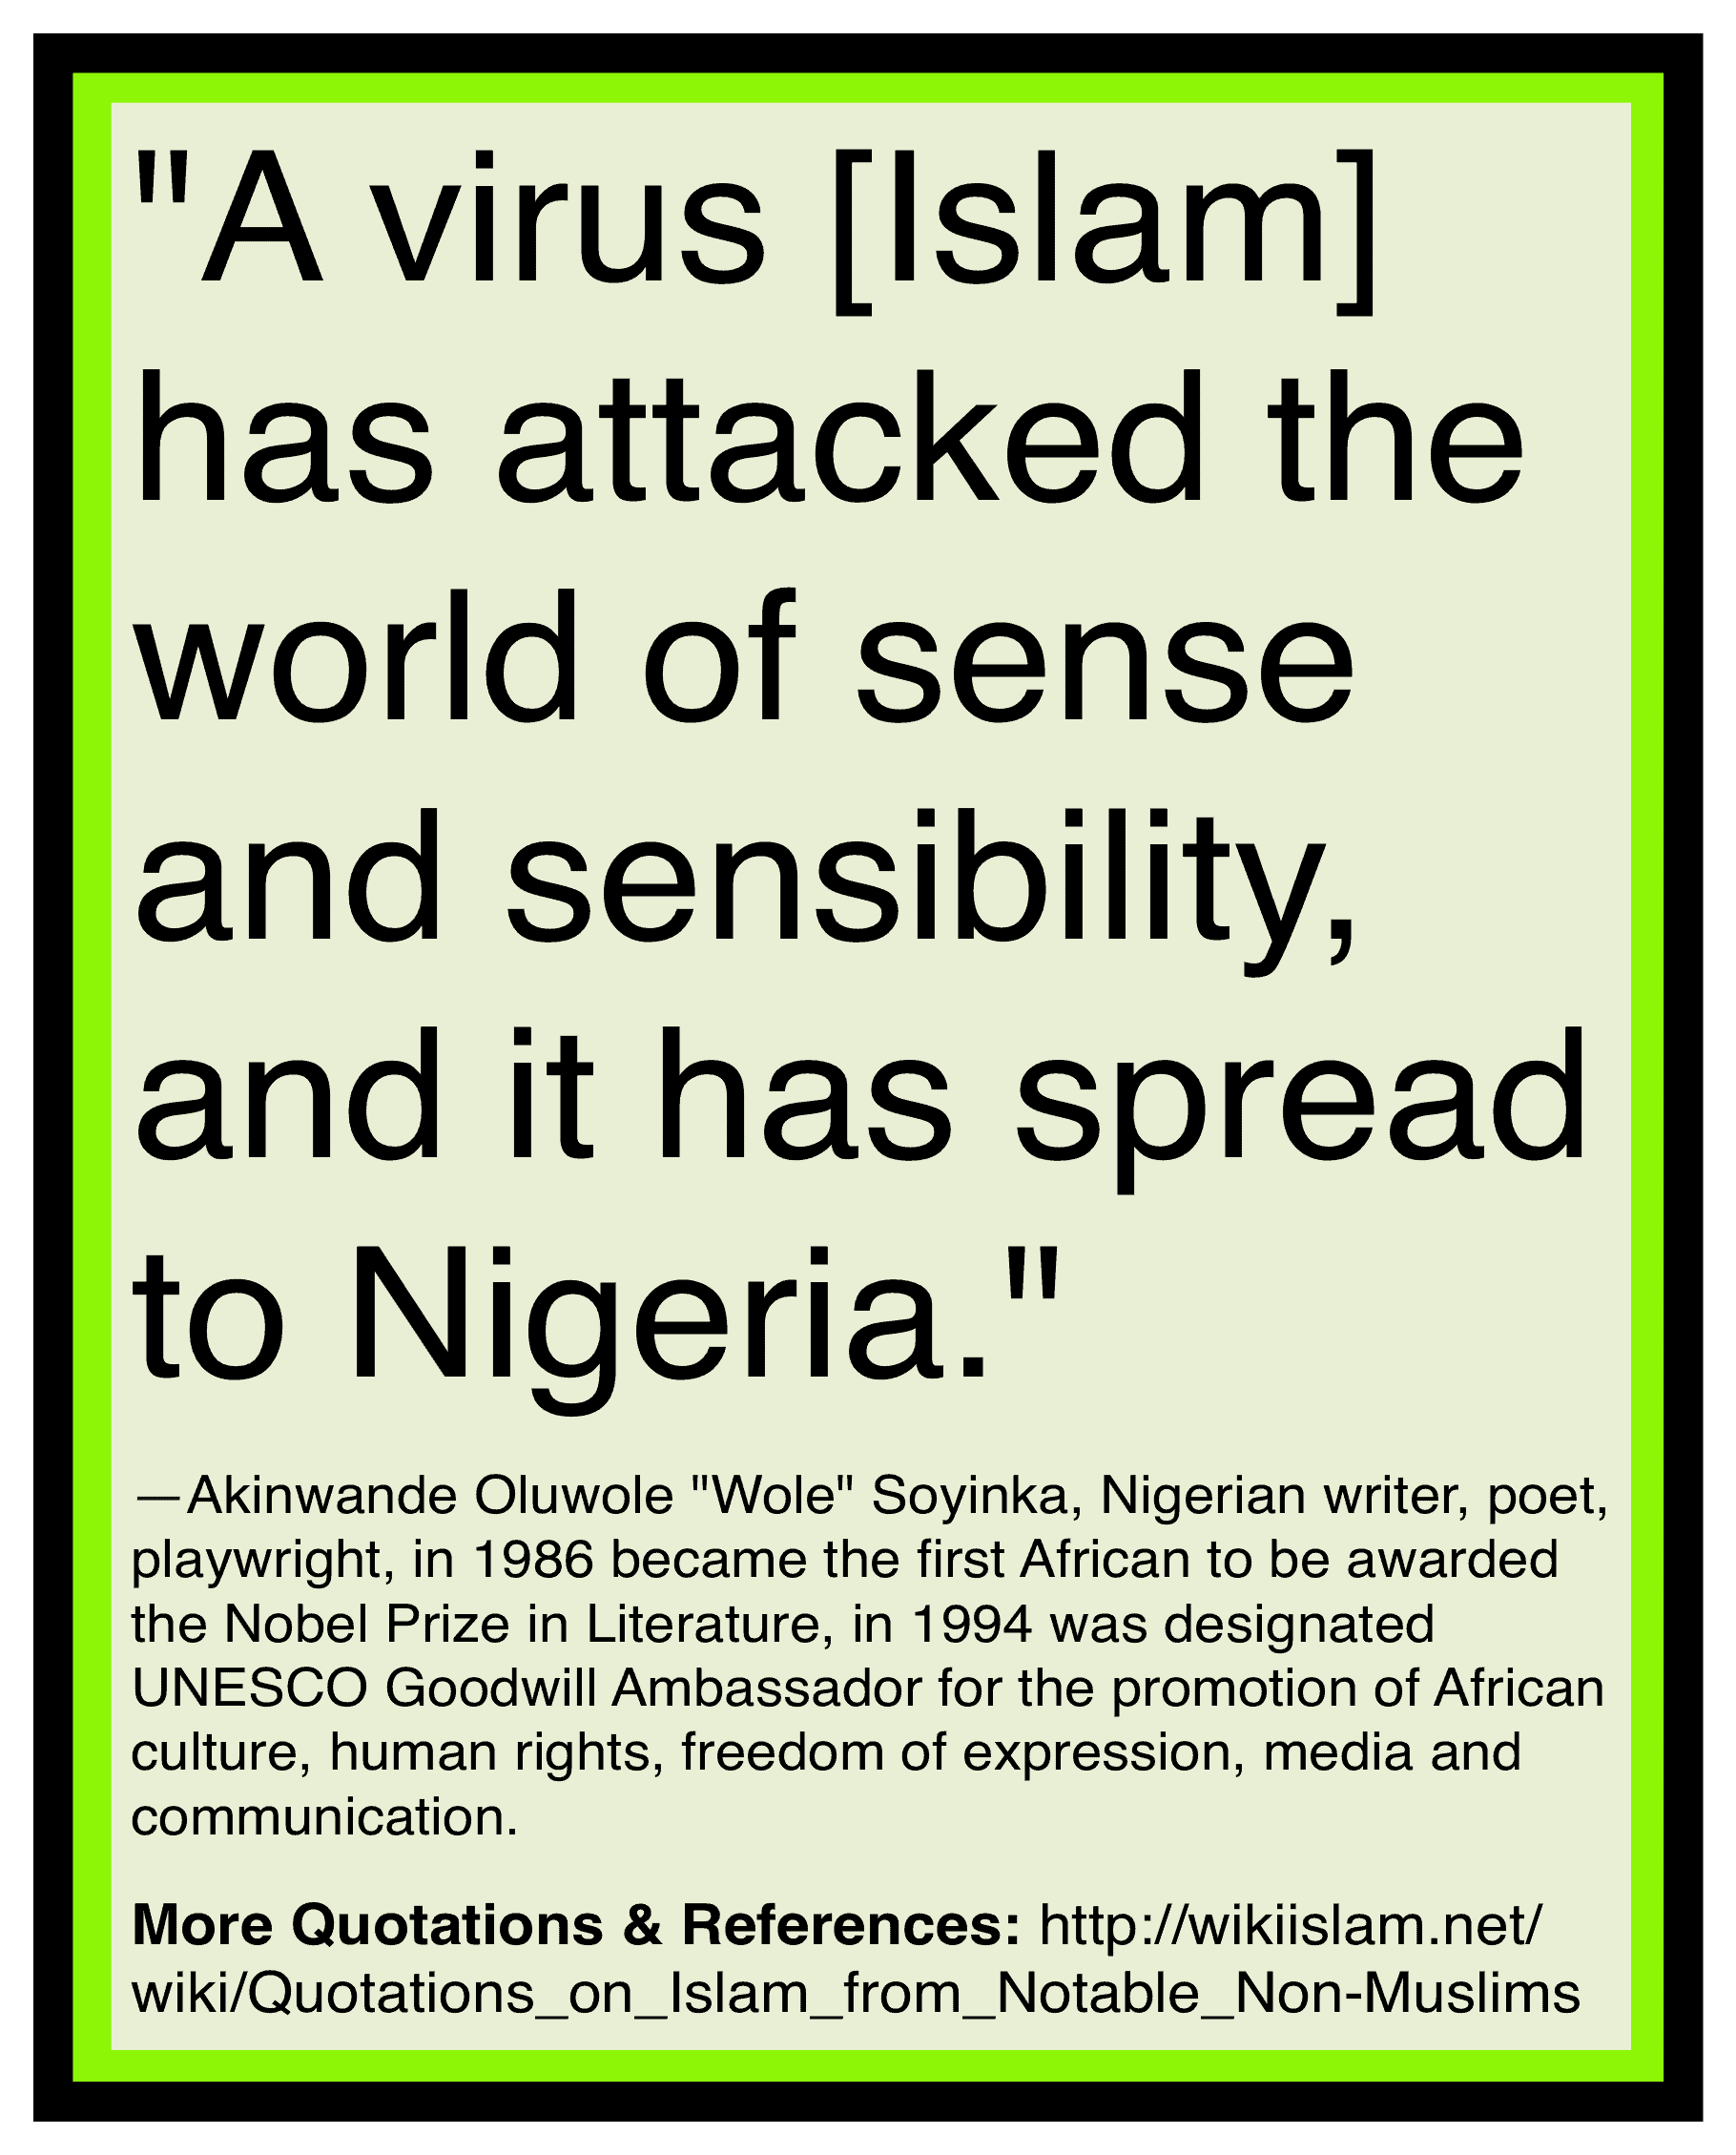 Islam is a virus of evil